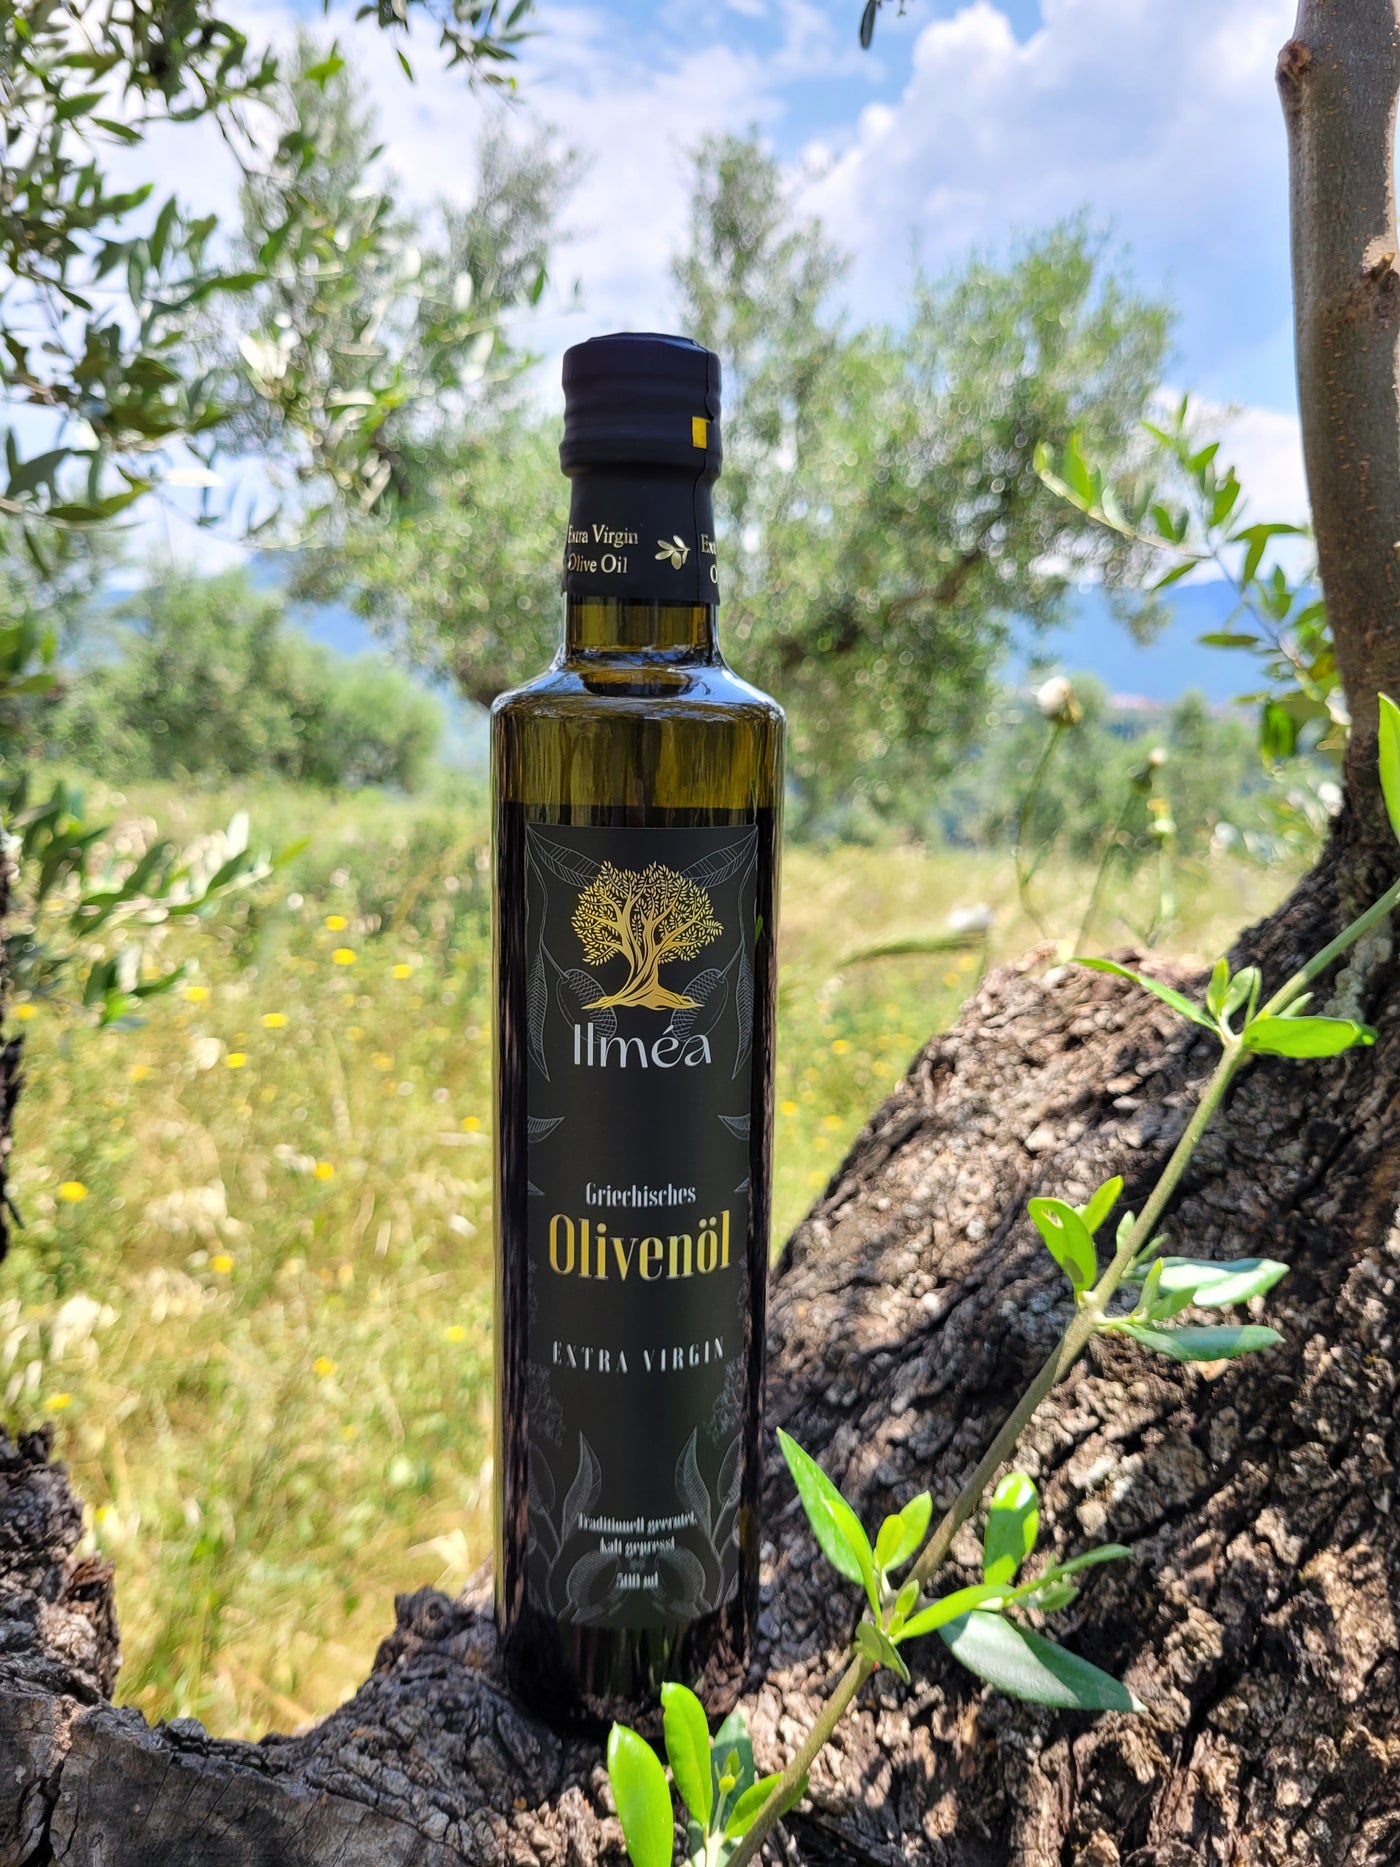 500ml Ilmea Olivenölflasche. Kalt gepresstes Olivenöl.